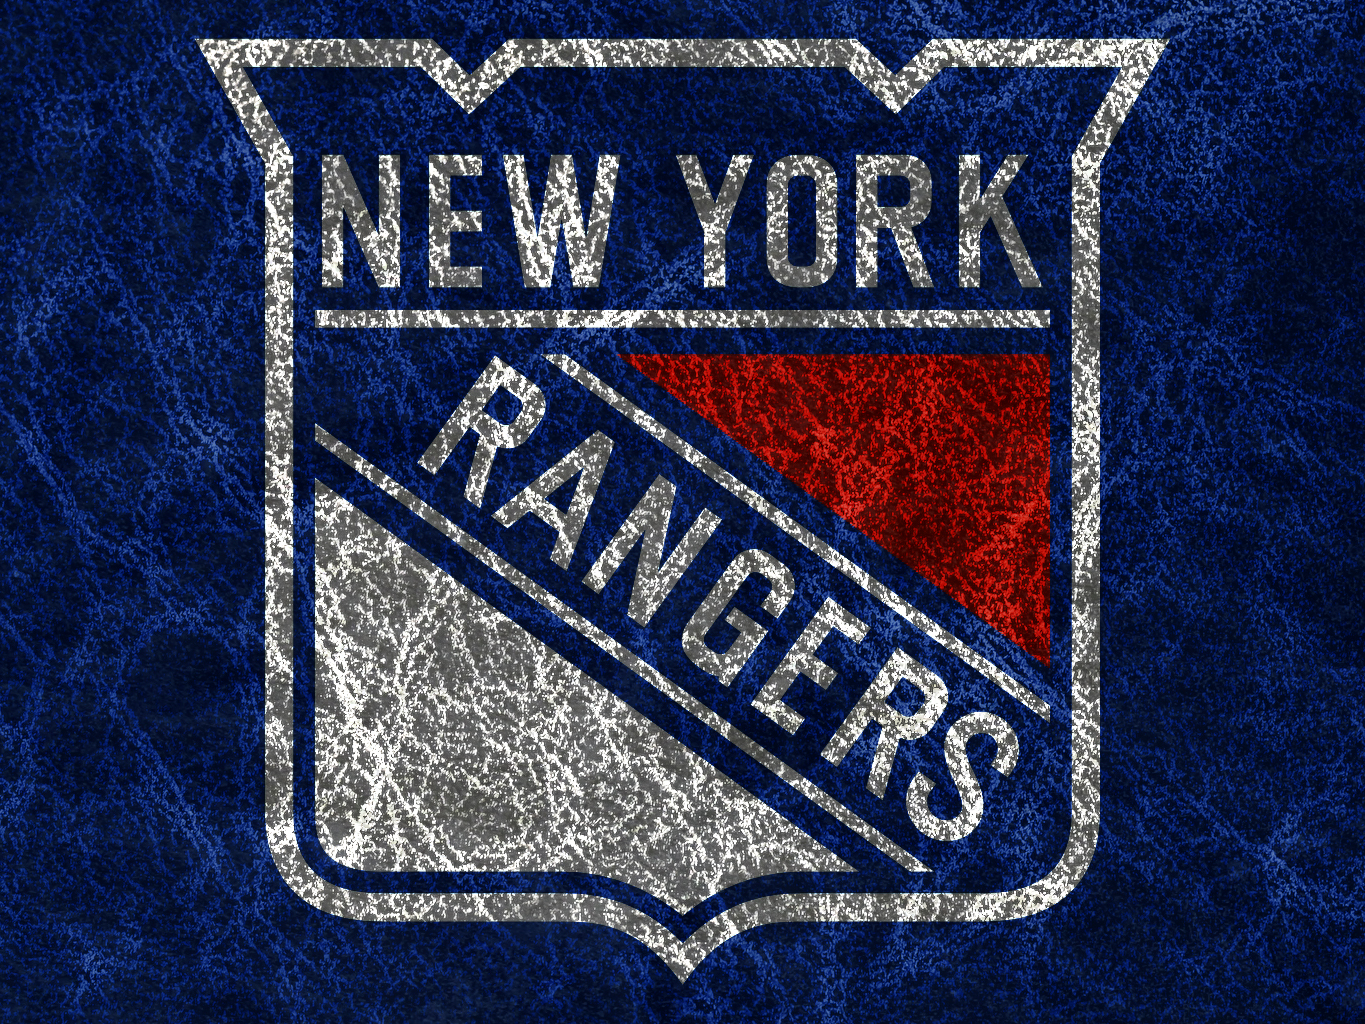 Buy New York Rangers Tickets Today